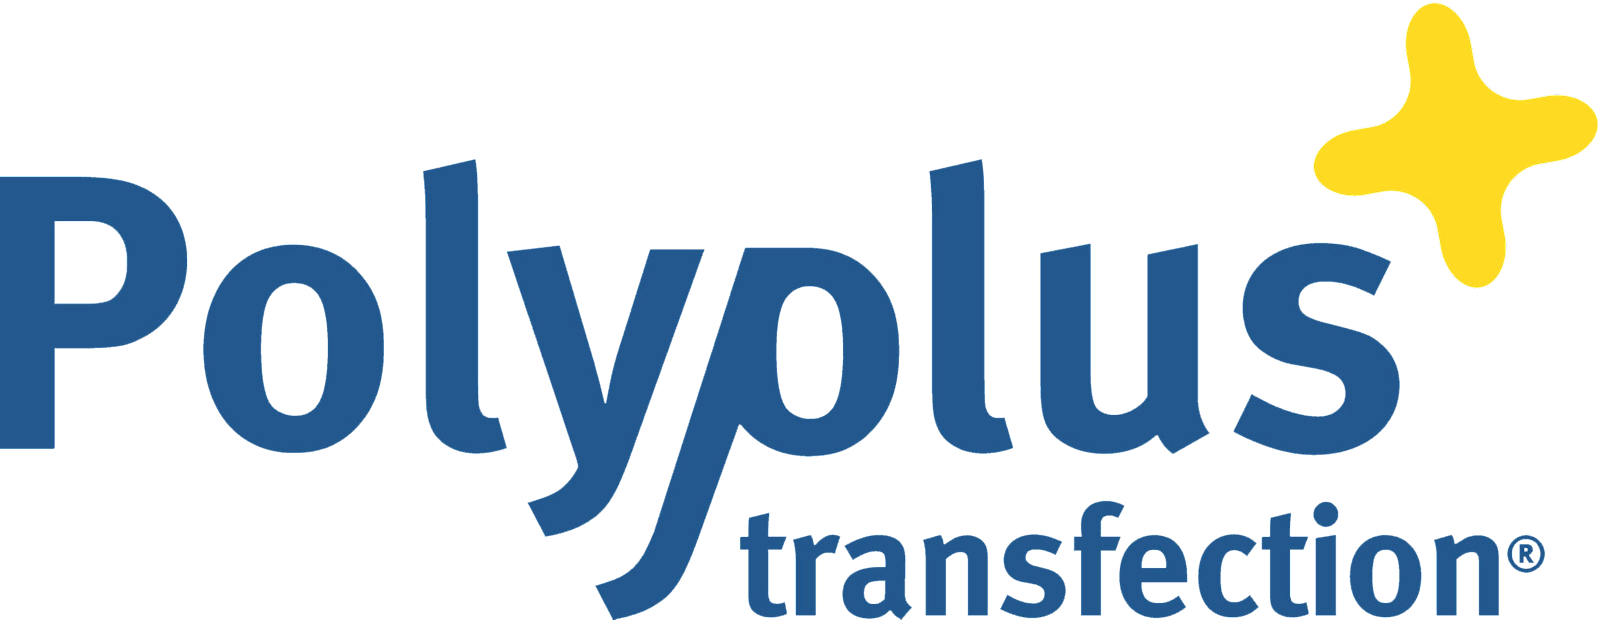 https://www.polyplus-transfection.com/?utm_source=referral&utm_medium=Logo+webinar+page&utm_campaign=BioInsights+October+2021+webinar